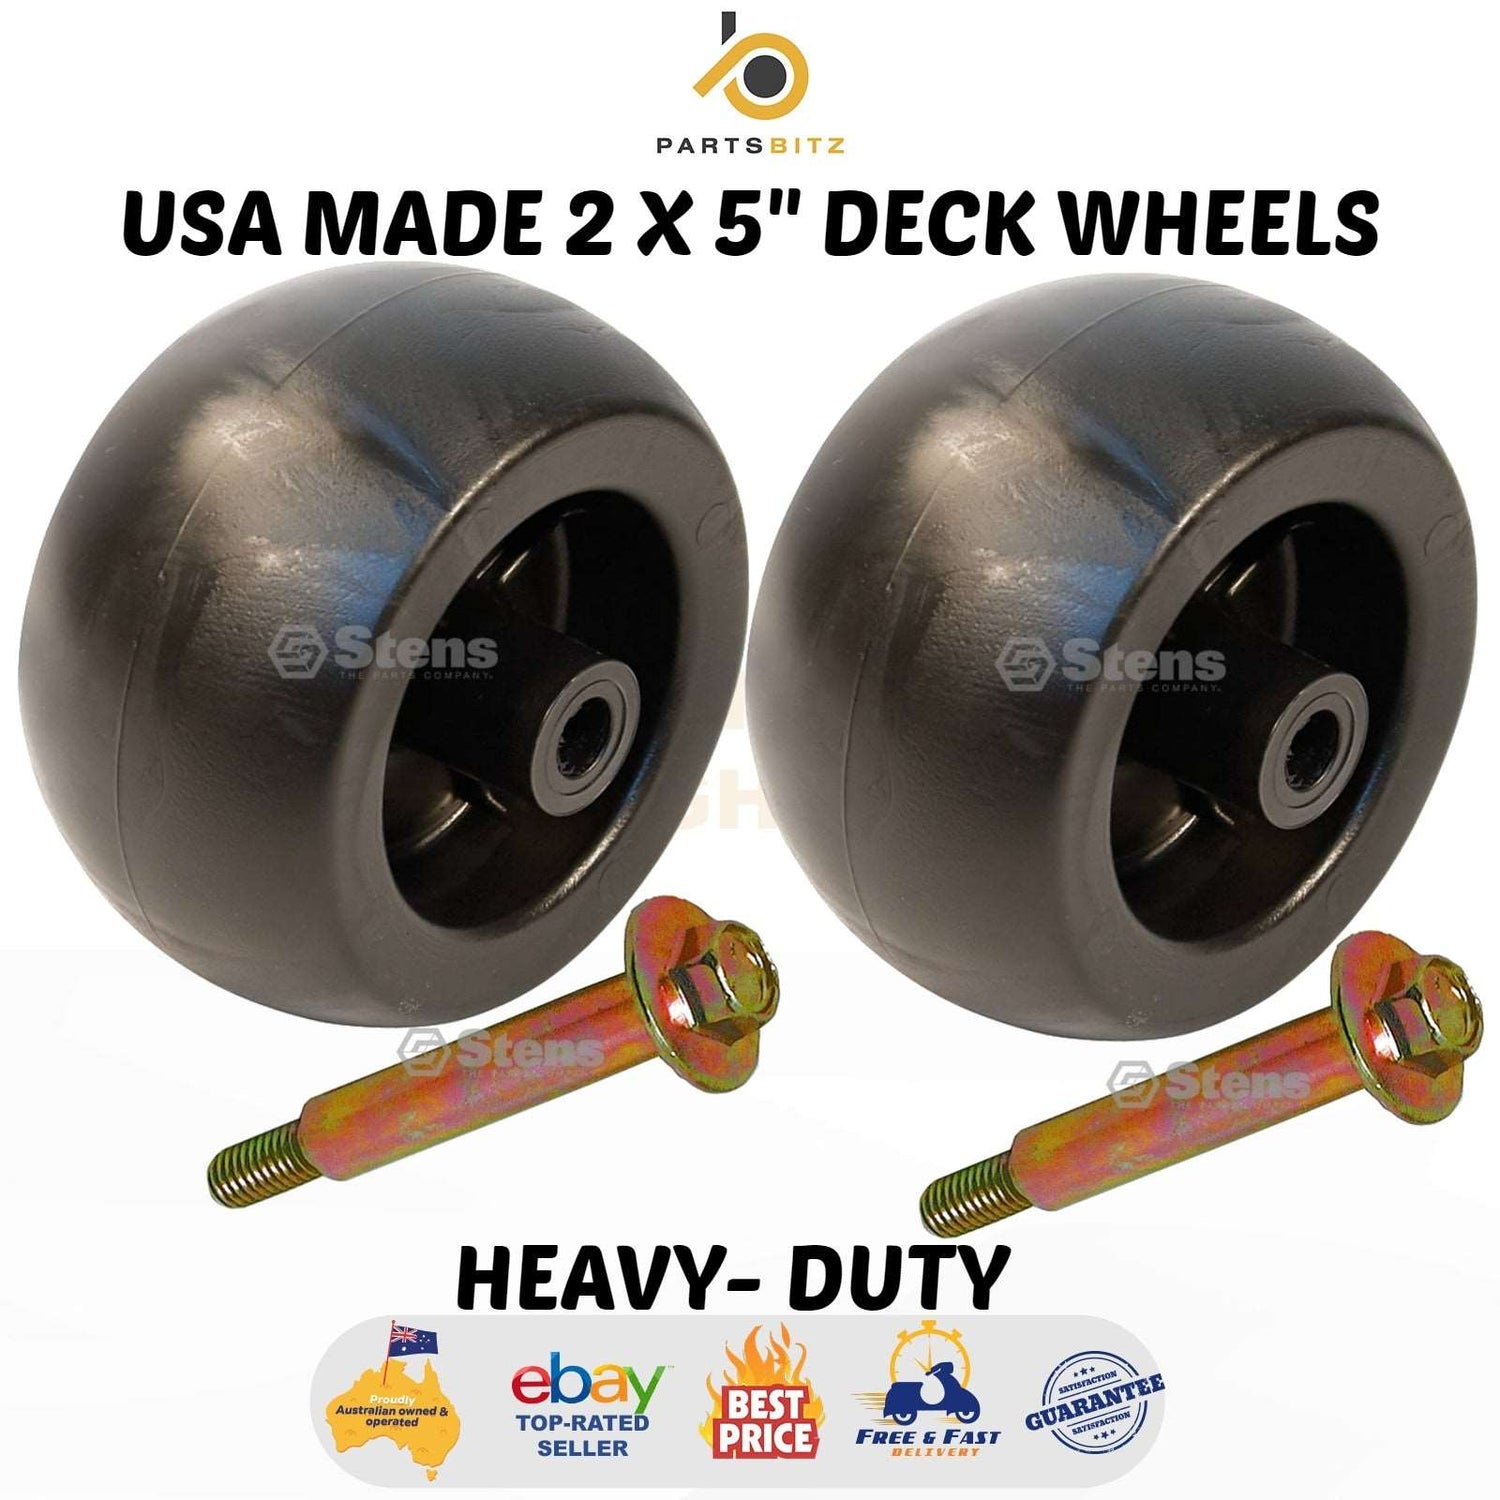 USA MADE 2 X 5" Deck Wheels & Bolts for Husqvarna Murray Toro Hustler Mowers